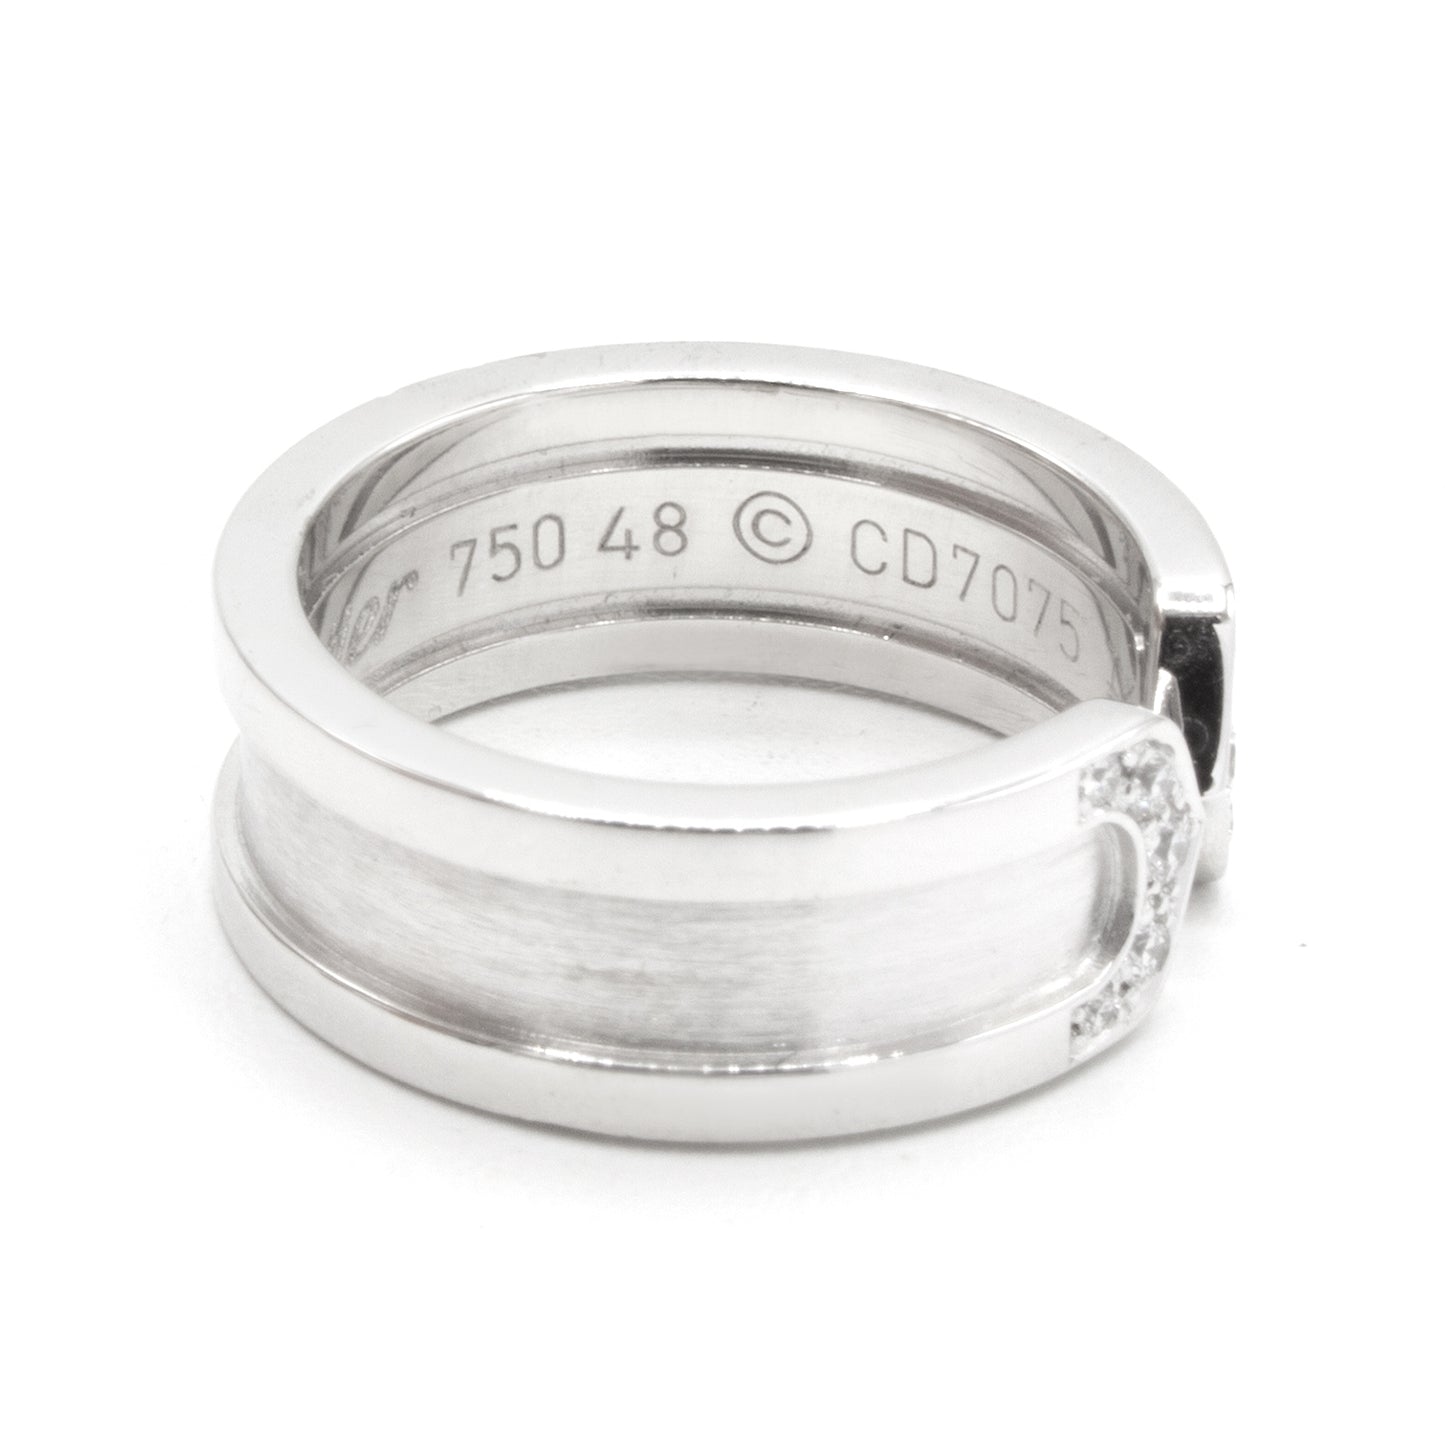 Cartier "C de Cartier" ring